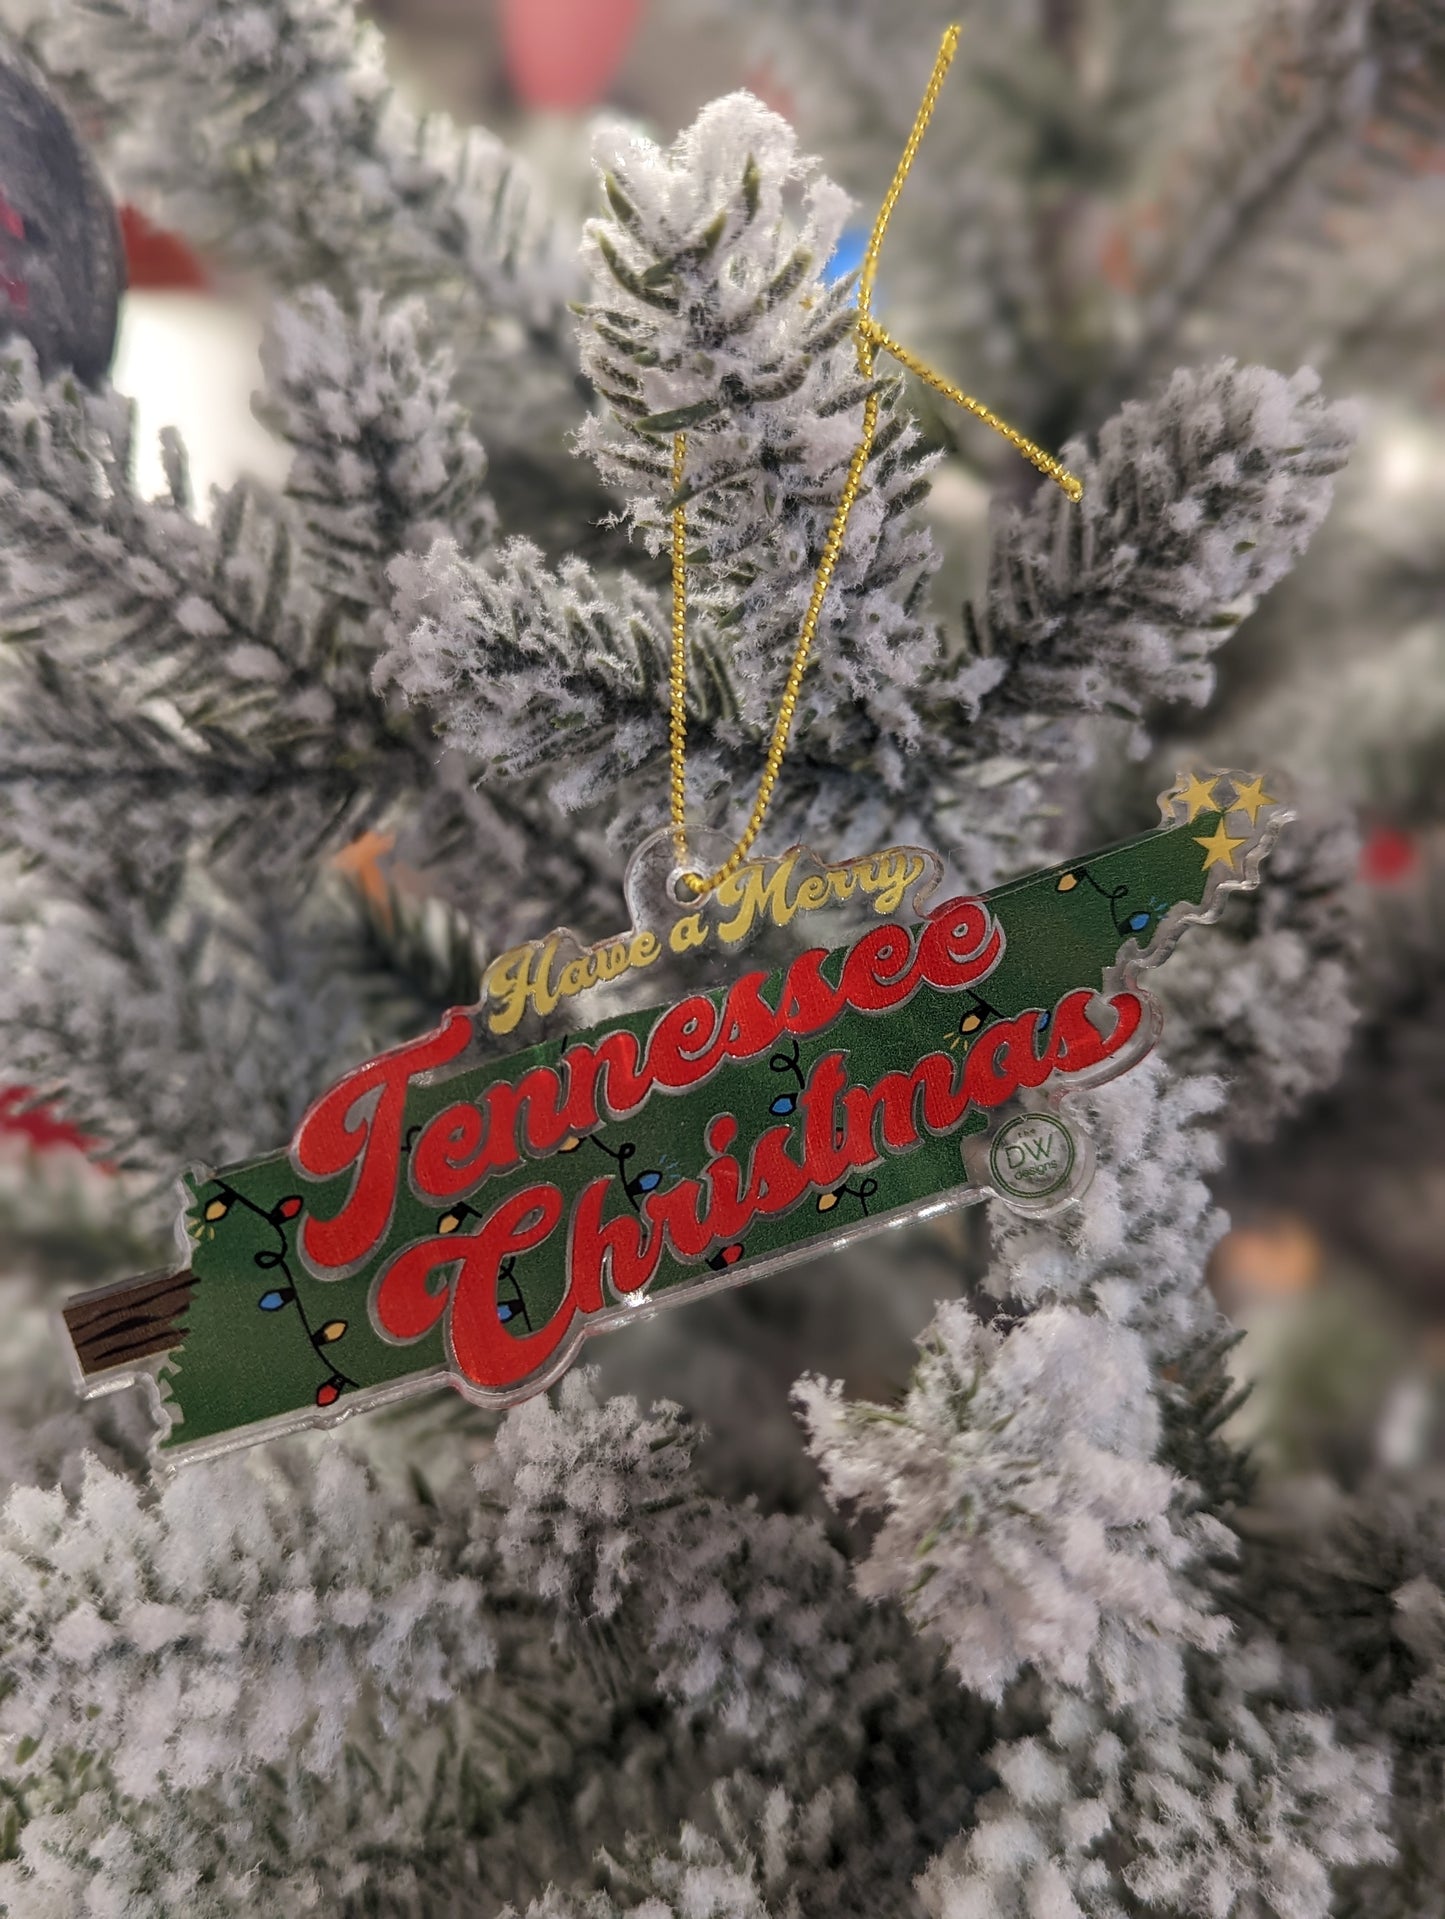 The Merry TN Christmas Ornament